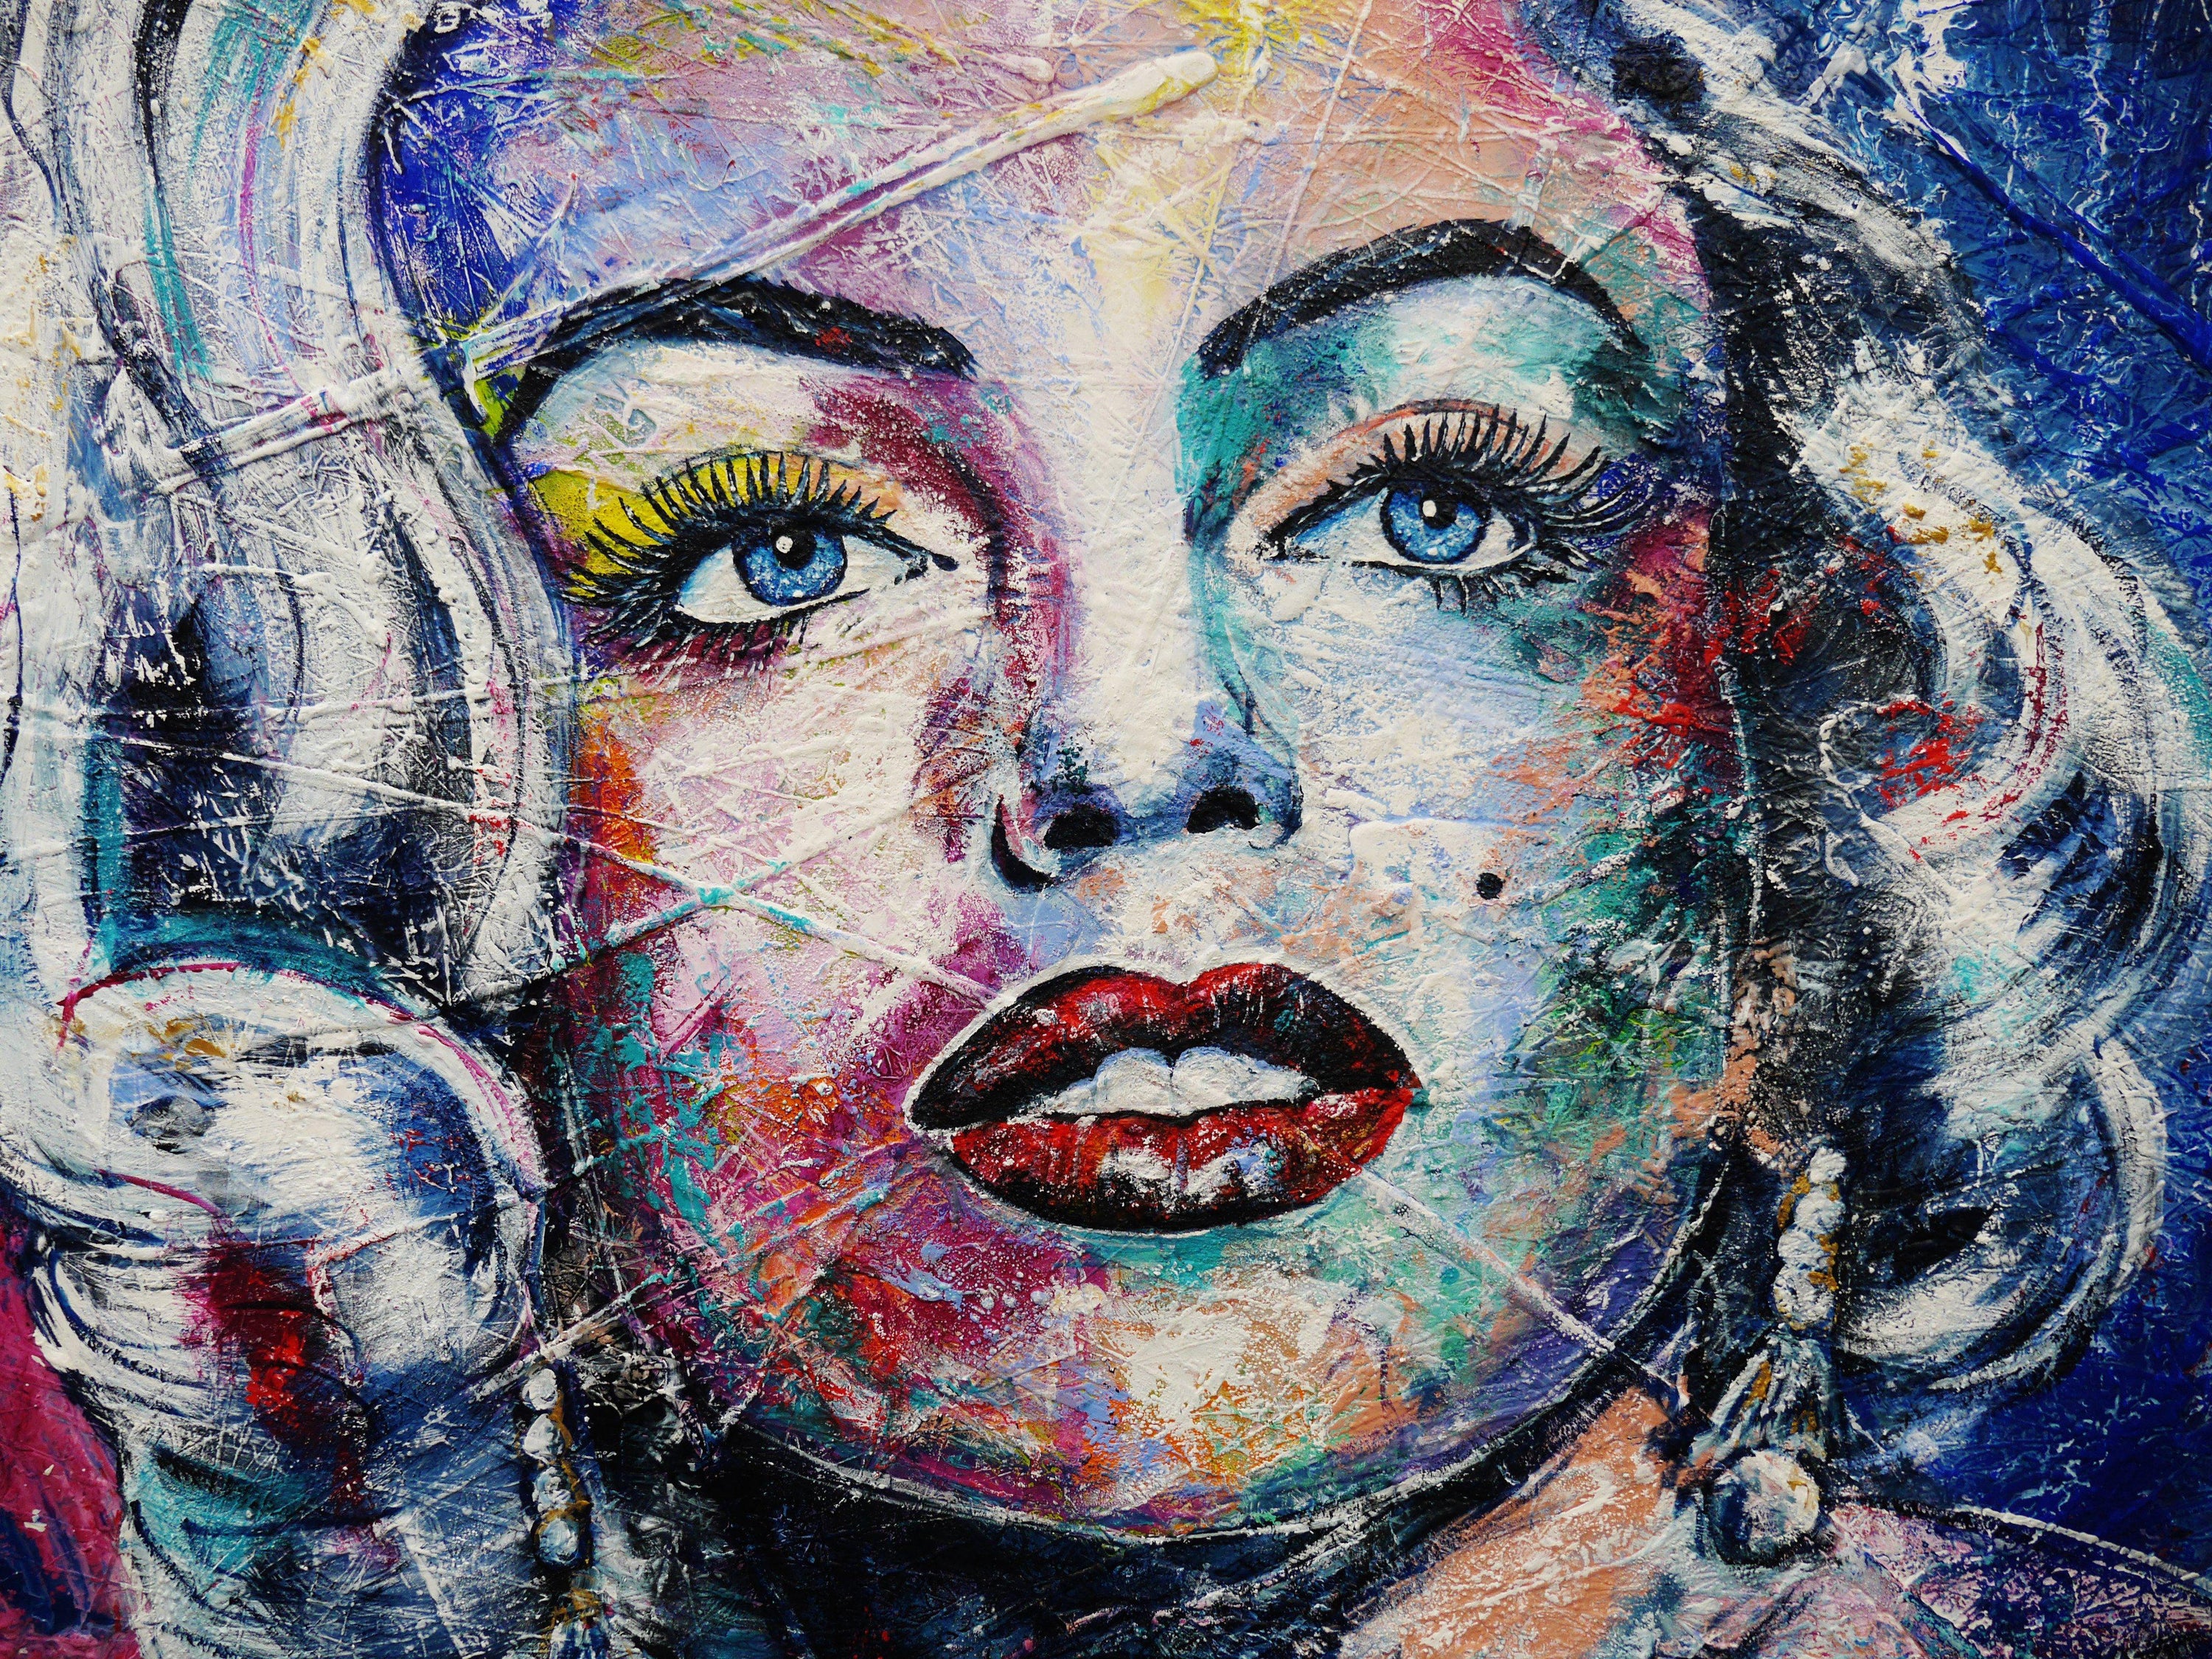 Be Inspired! Abstract Realism Marilyn Monroe (SOLD)-abstract realism-Franko-[franko_artist]-[Art]-[interior_design]-Franklin Art Studio